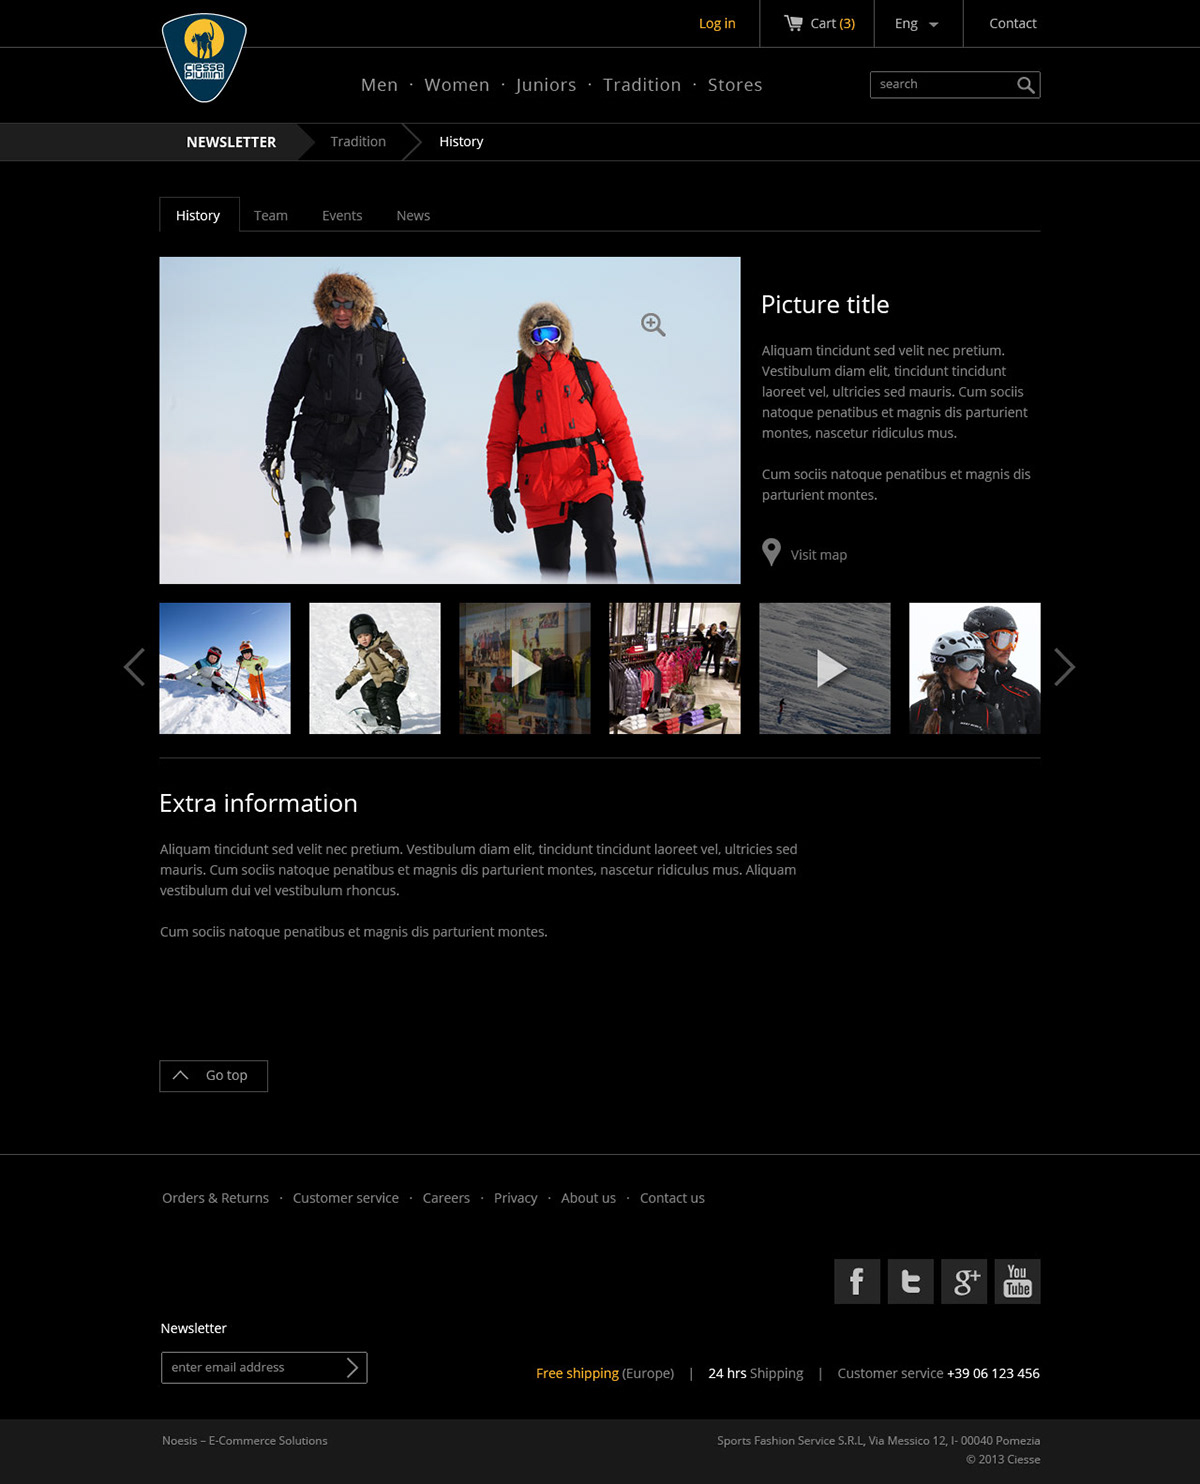 Clothing Website Clothing Company ciesse piumini e-commerce Online shop winter clothing dark website black background fa design Italy elegant custom design interaction